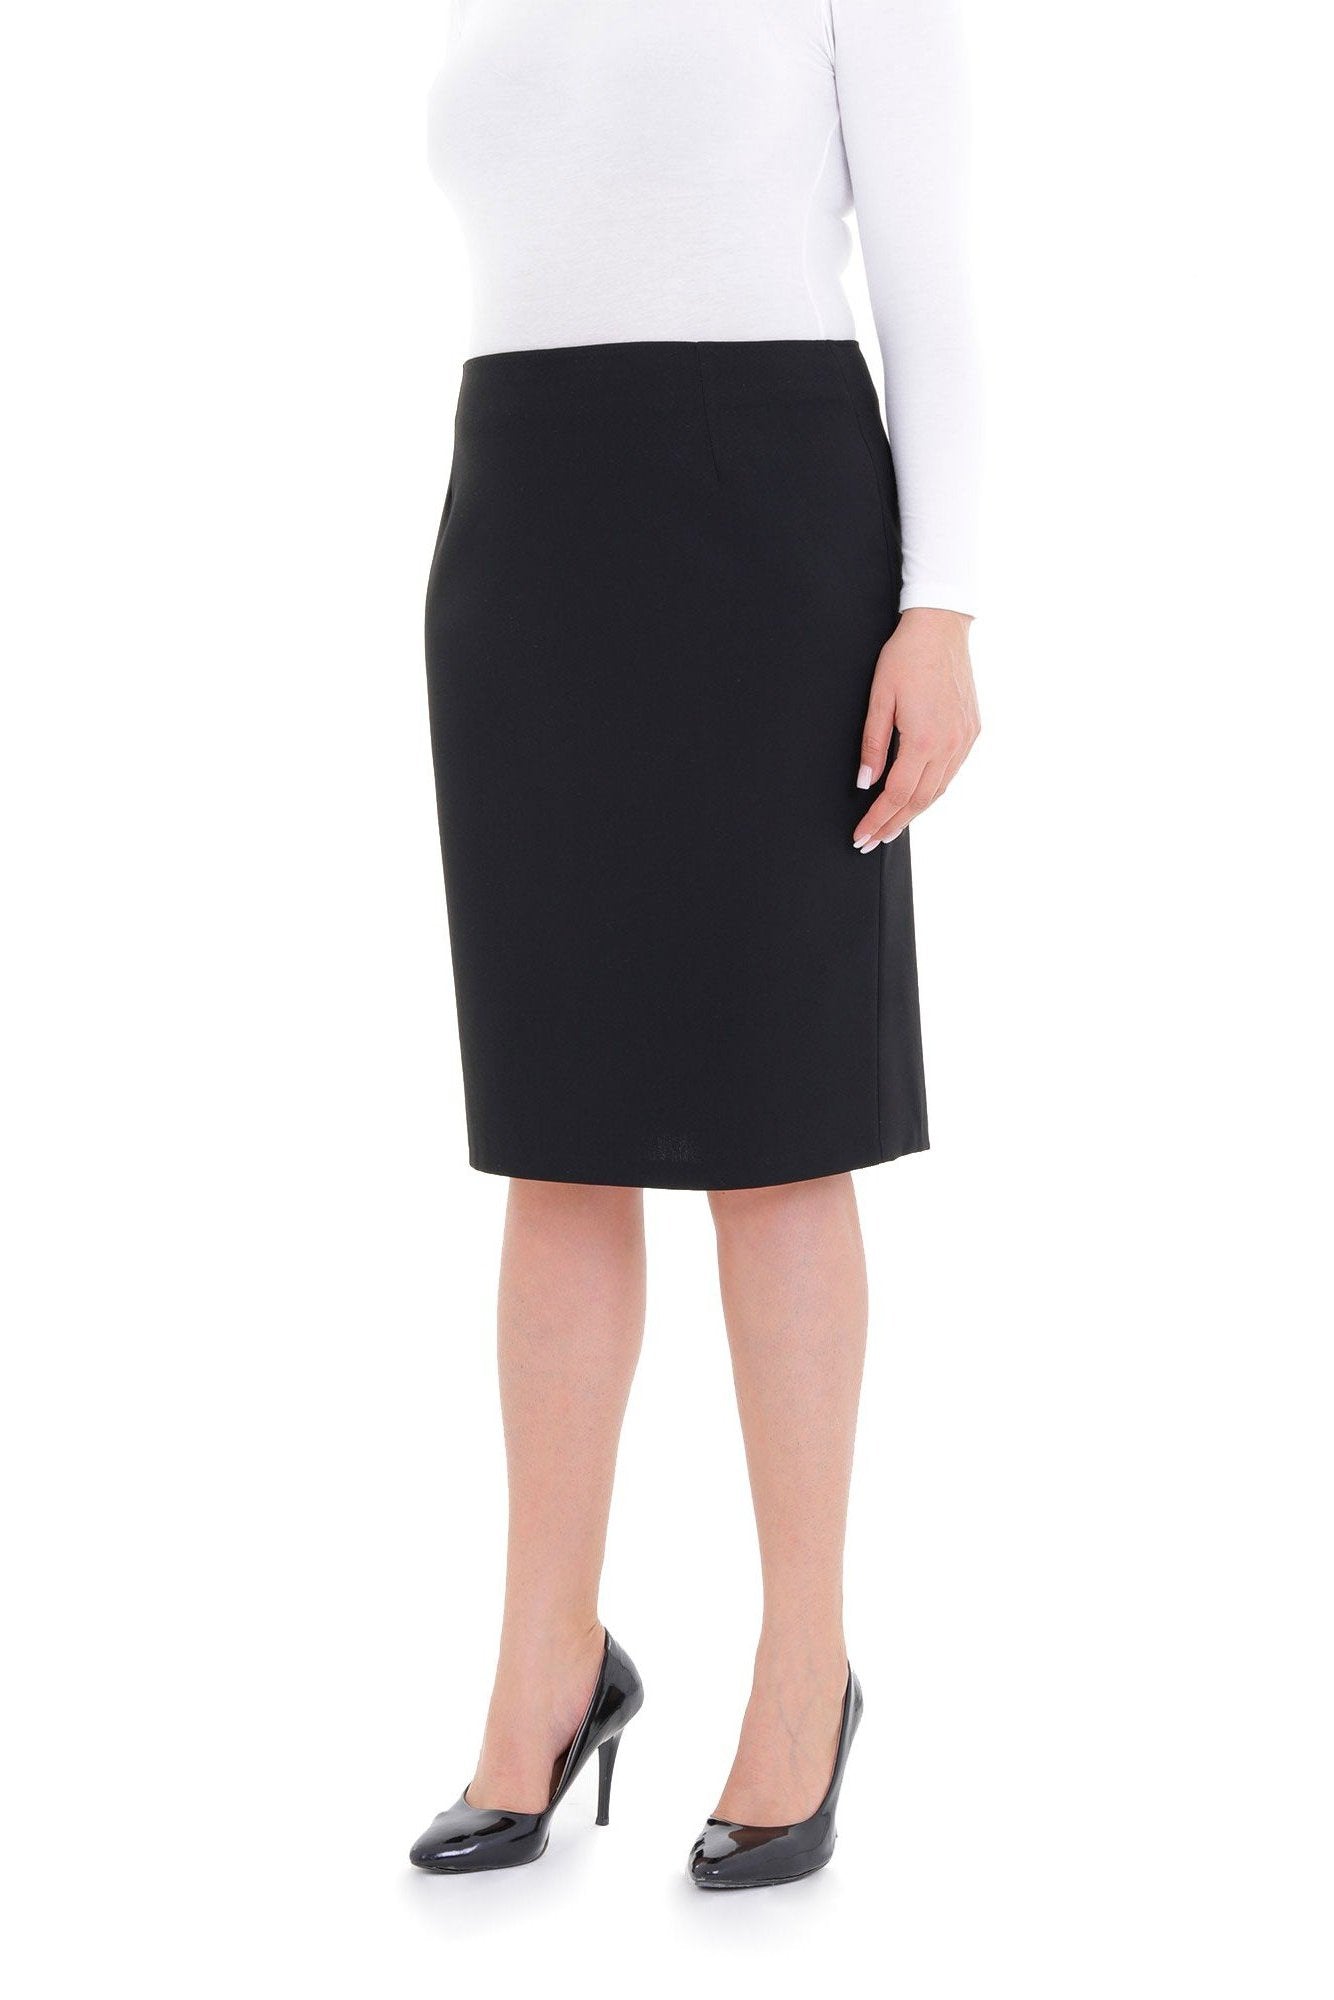 Women's Oversized Comfort Fit Knee-High Black Midi Pencil Skirt G-Line